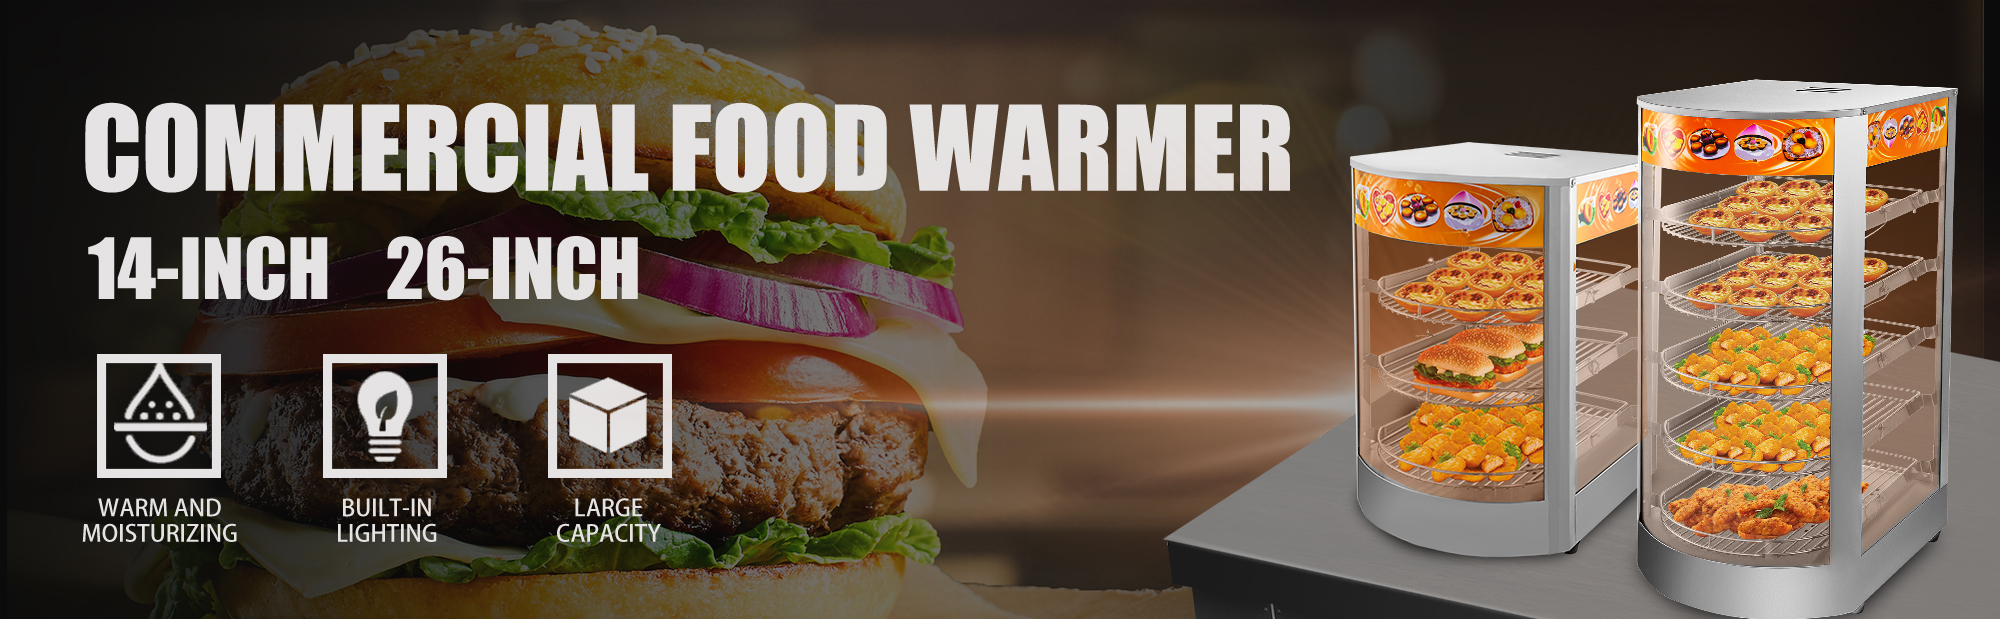 UbesGoo 3-Tier 110V Food Warmer, 800W Commercial Food Warmer Display  Electric Countertop Food Pizza Warmer